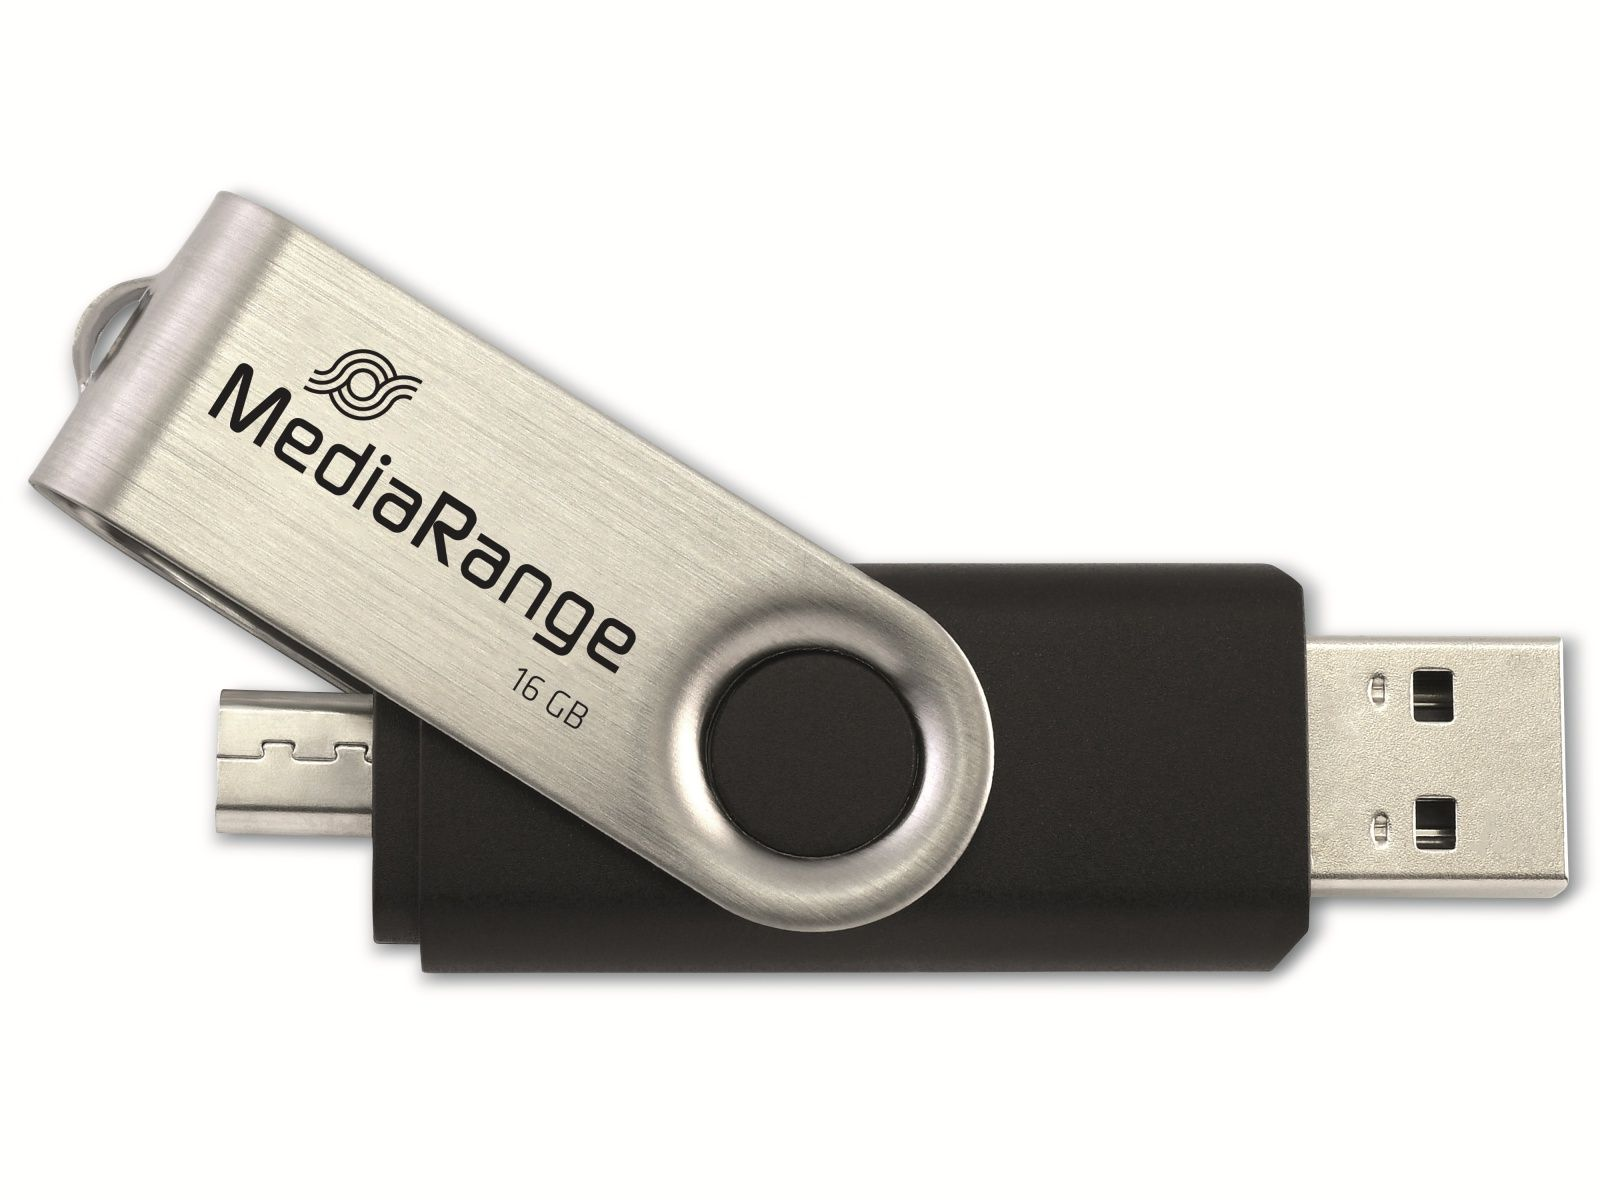 USB USB-Stick GB MR931-2, 16 16 und USB-Stick GB) und MEDIARANGE 2.0 Micro, (schwarz/silber,